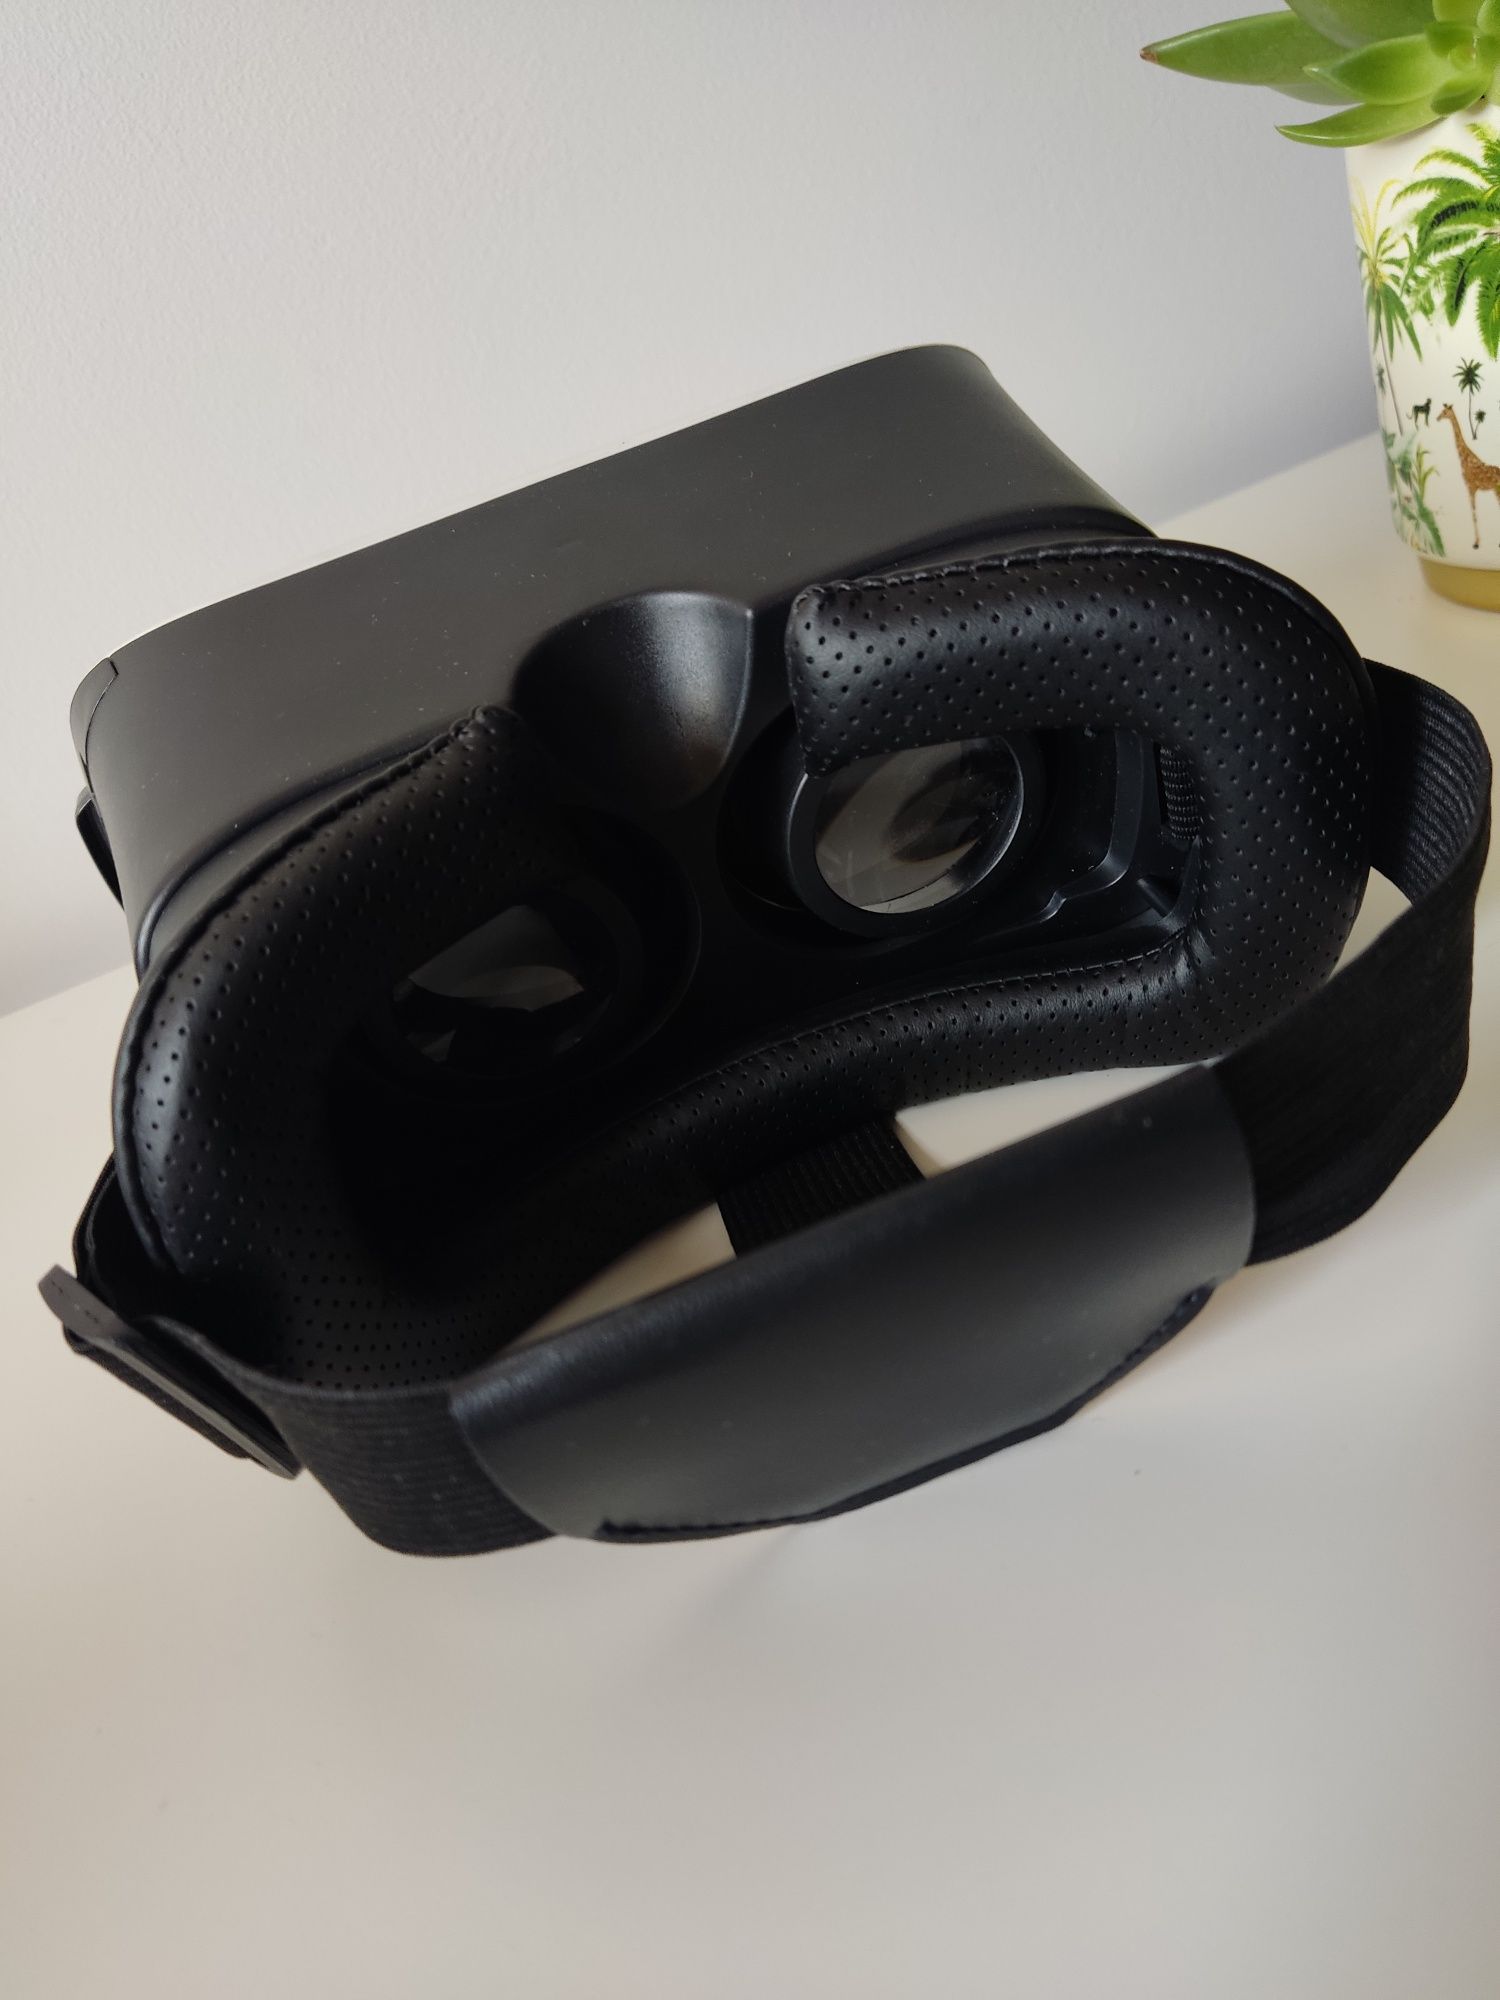 Gogle VR OMEGA 3D Box 

Używane białe